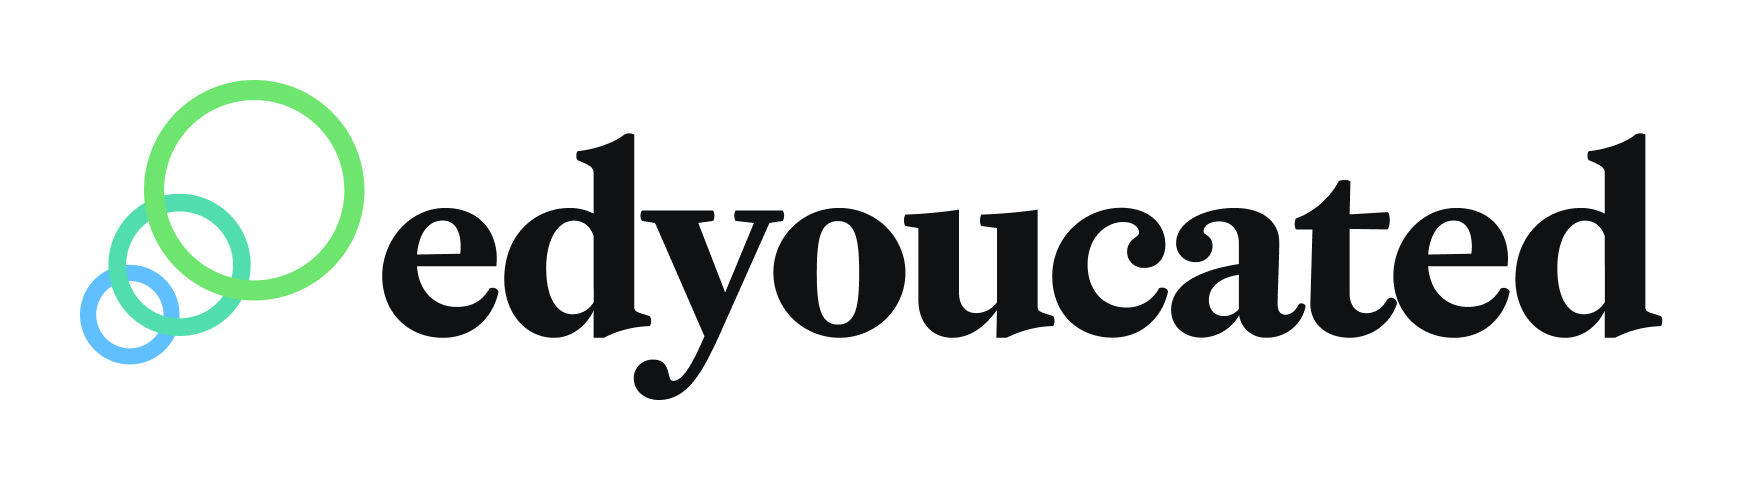 edyoucated Logo